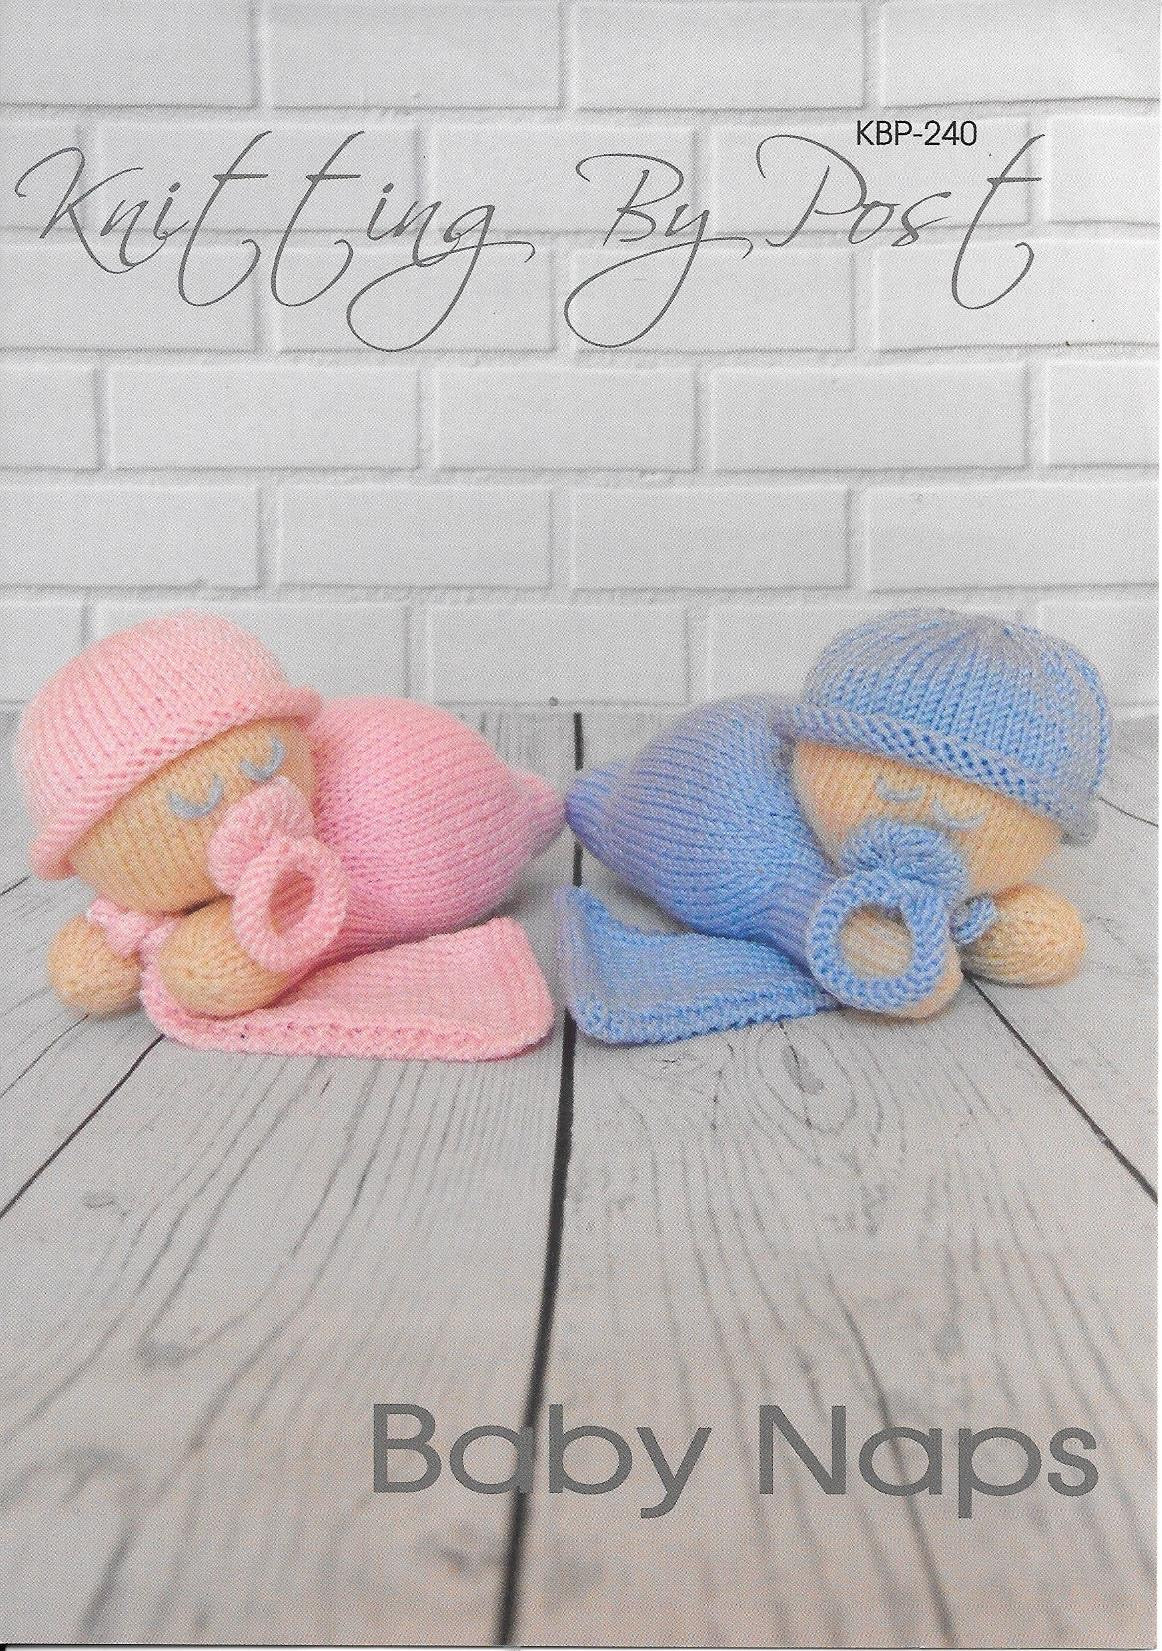 KBP-240 Baby Naps toy in DK knitting pattern